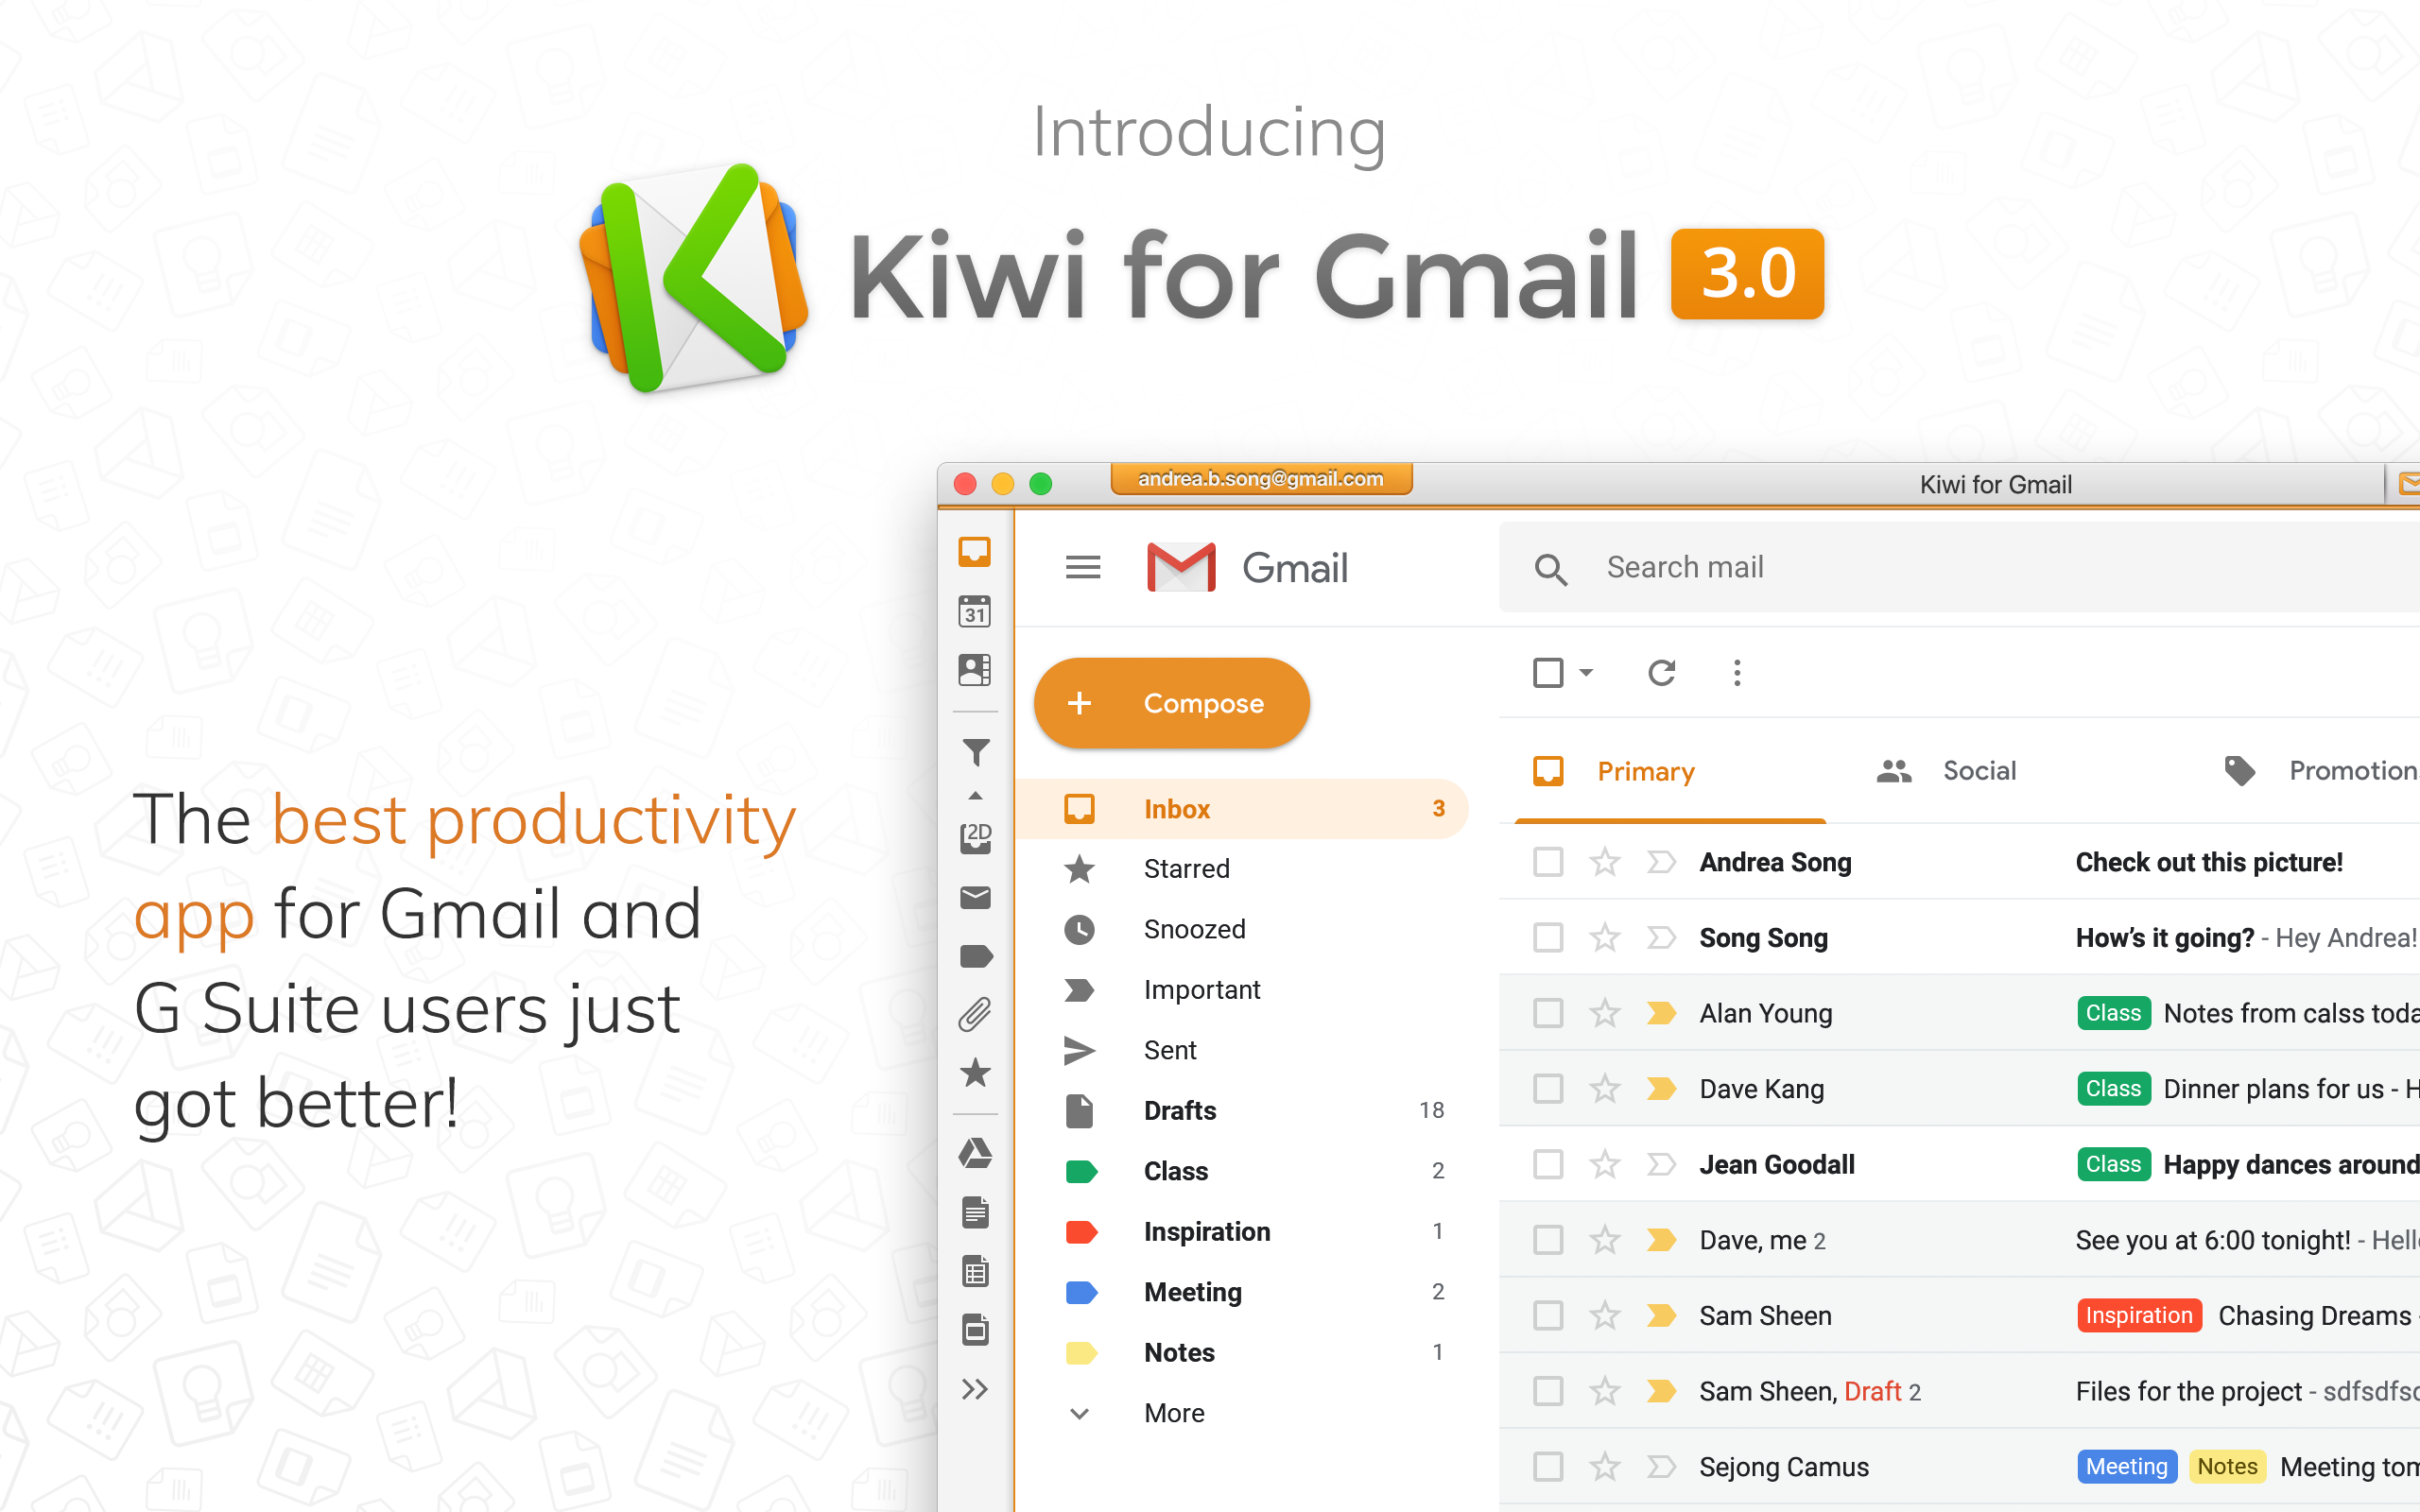 Kiwi for Gmail Software - Kiwi for Gmail Interface